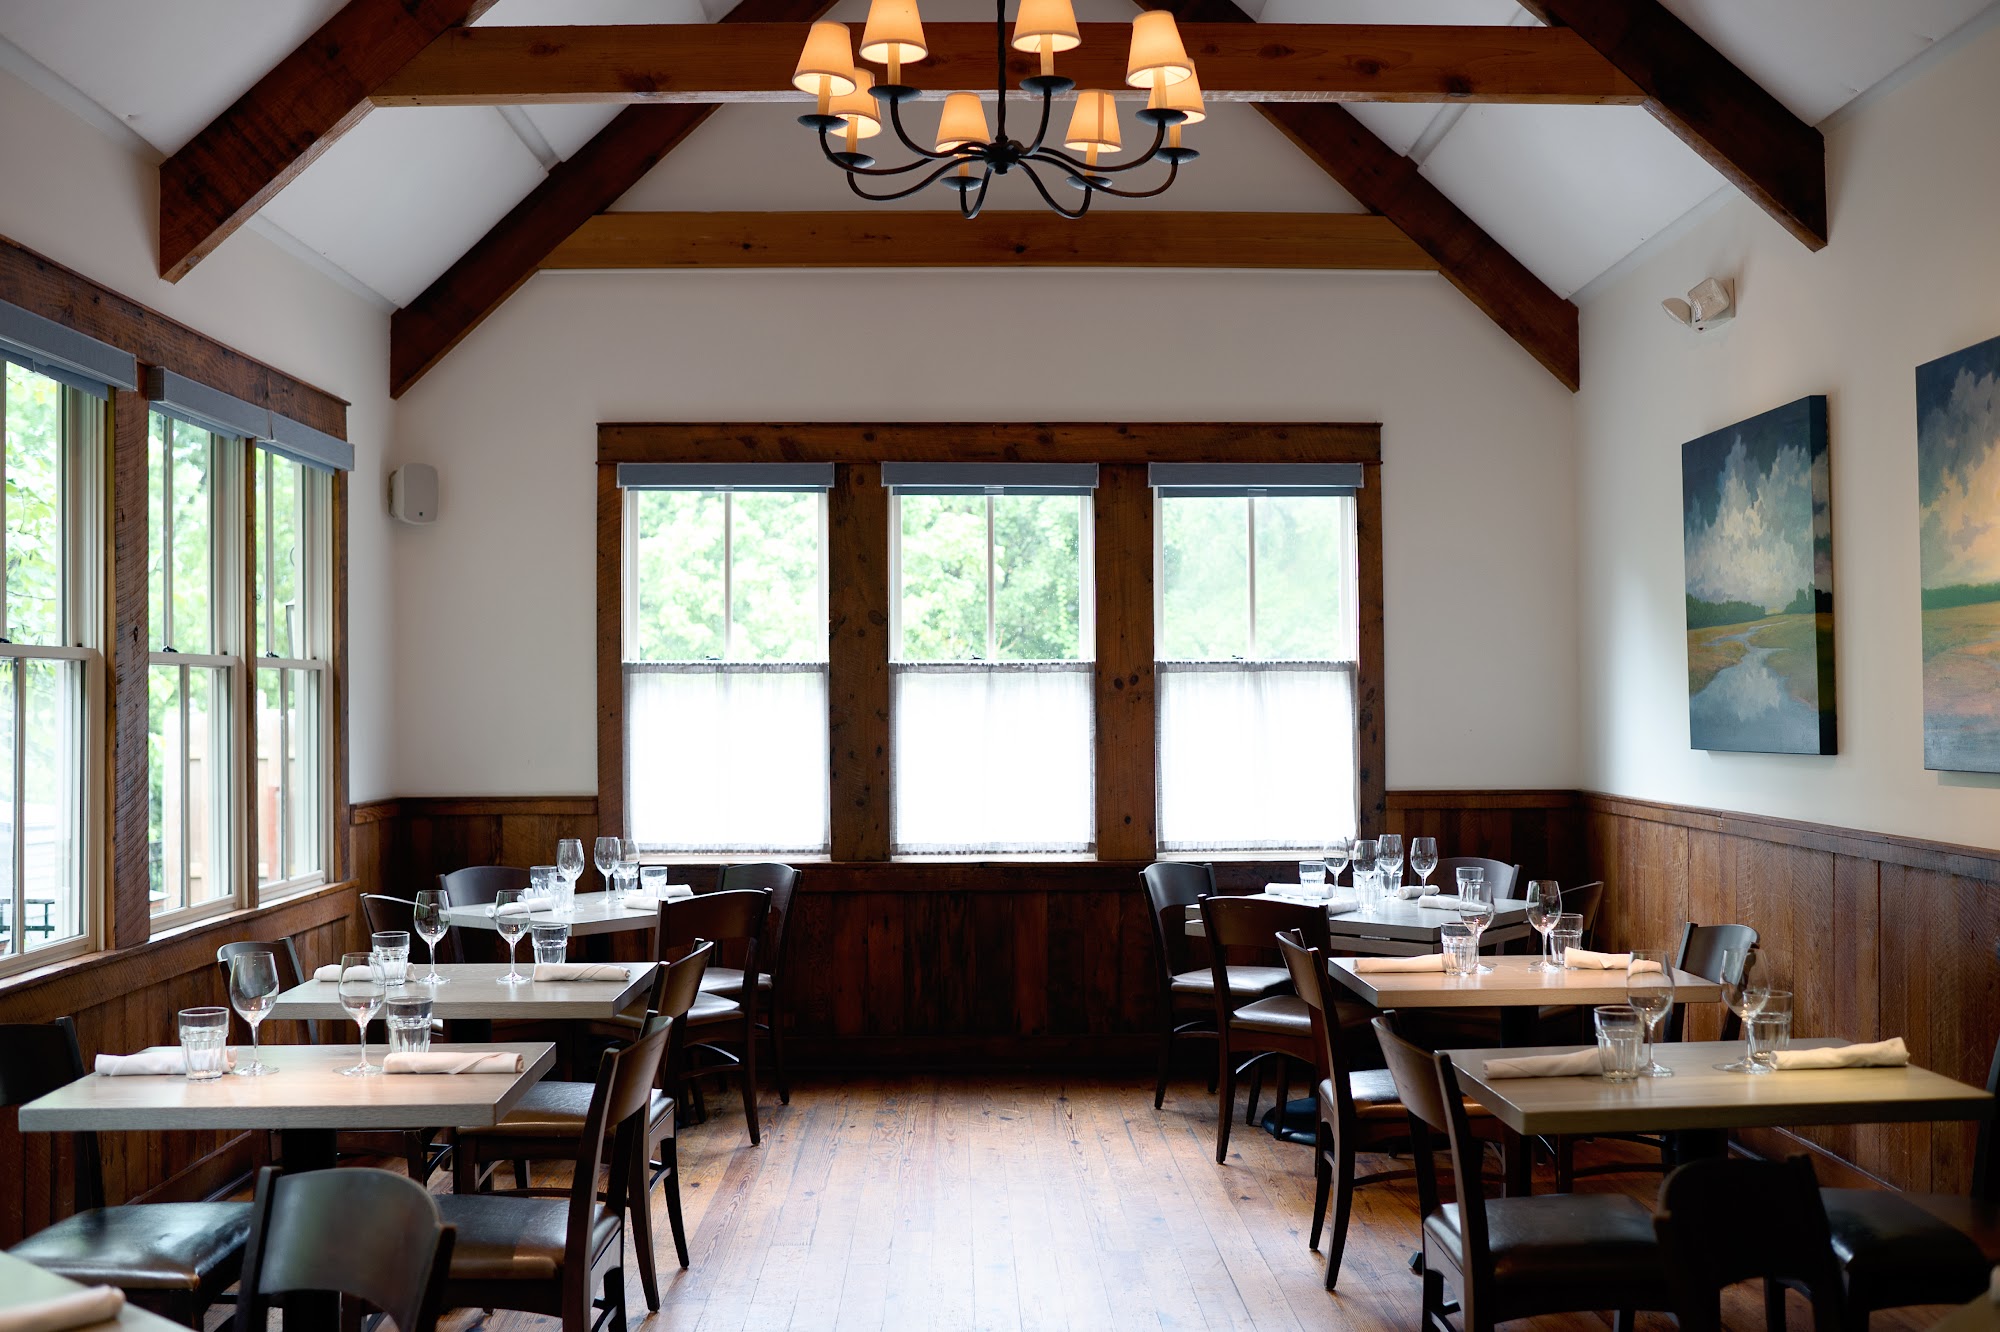 Table & Main | a southern tavern